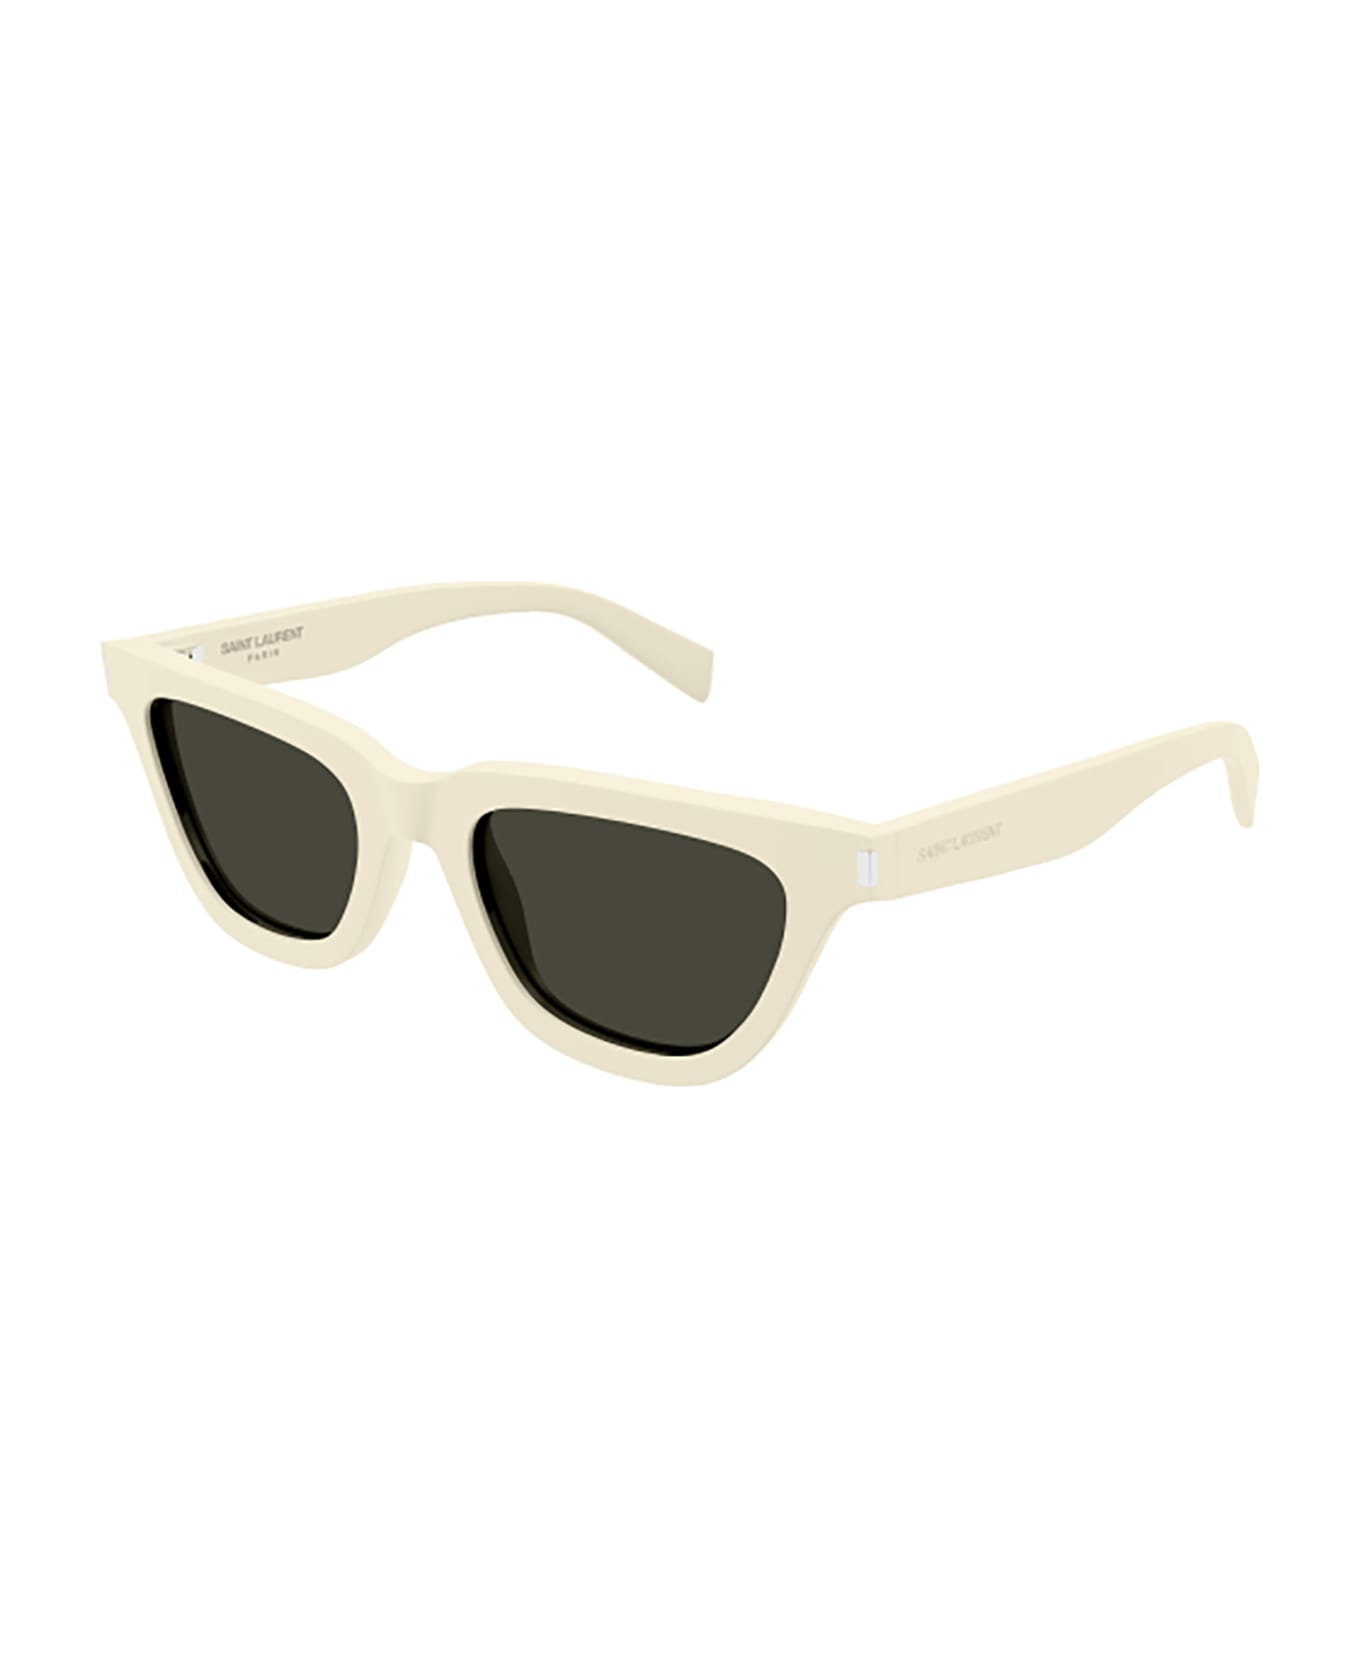 Saint Laurent Eyewear SL 462 SULPICE Sunglasses - Ivory Ivory Grey サングラス